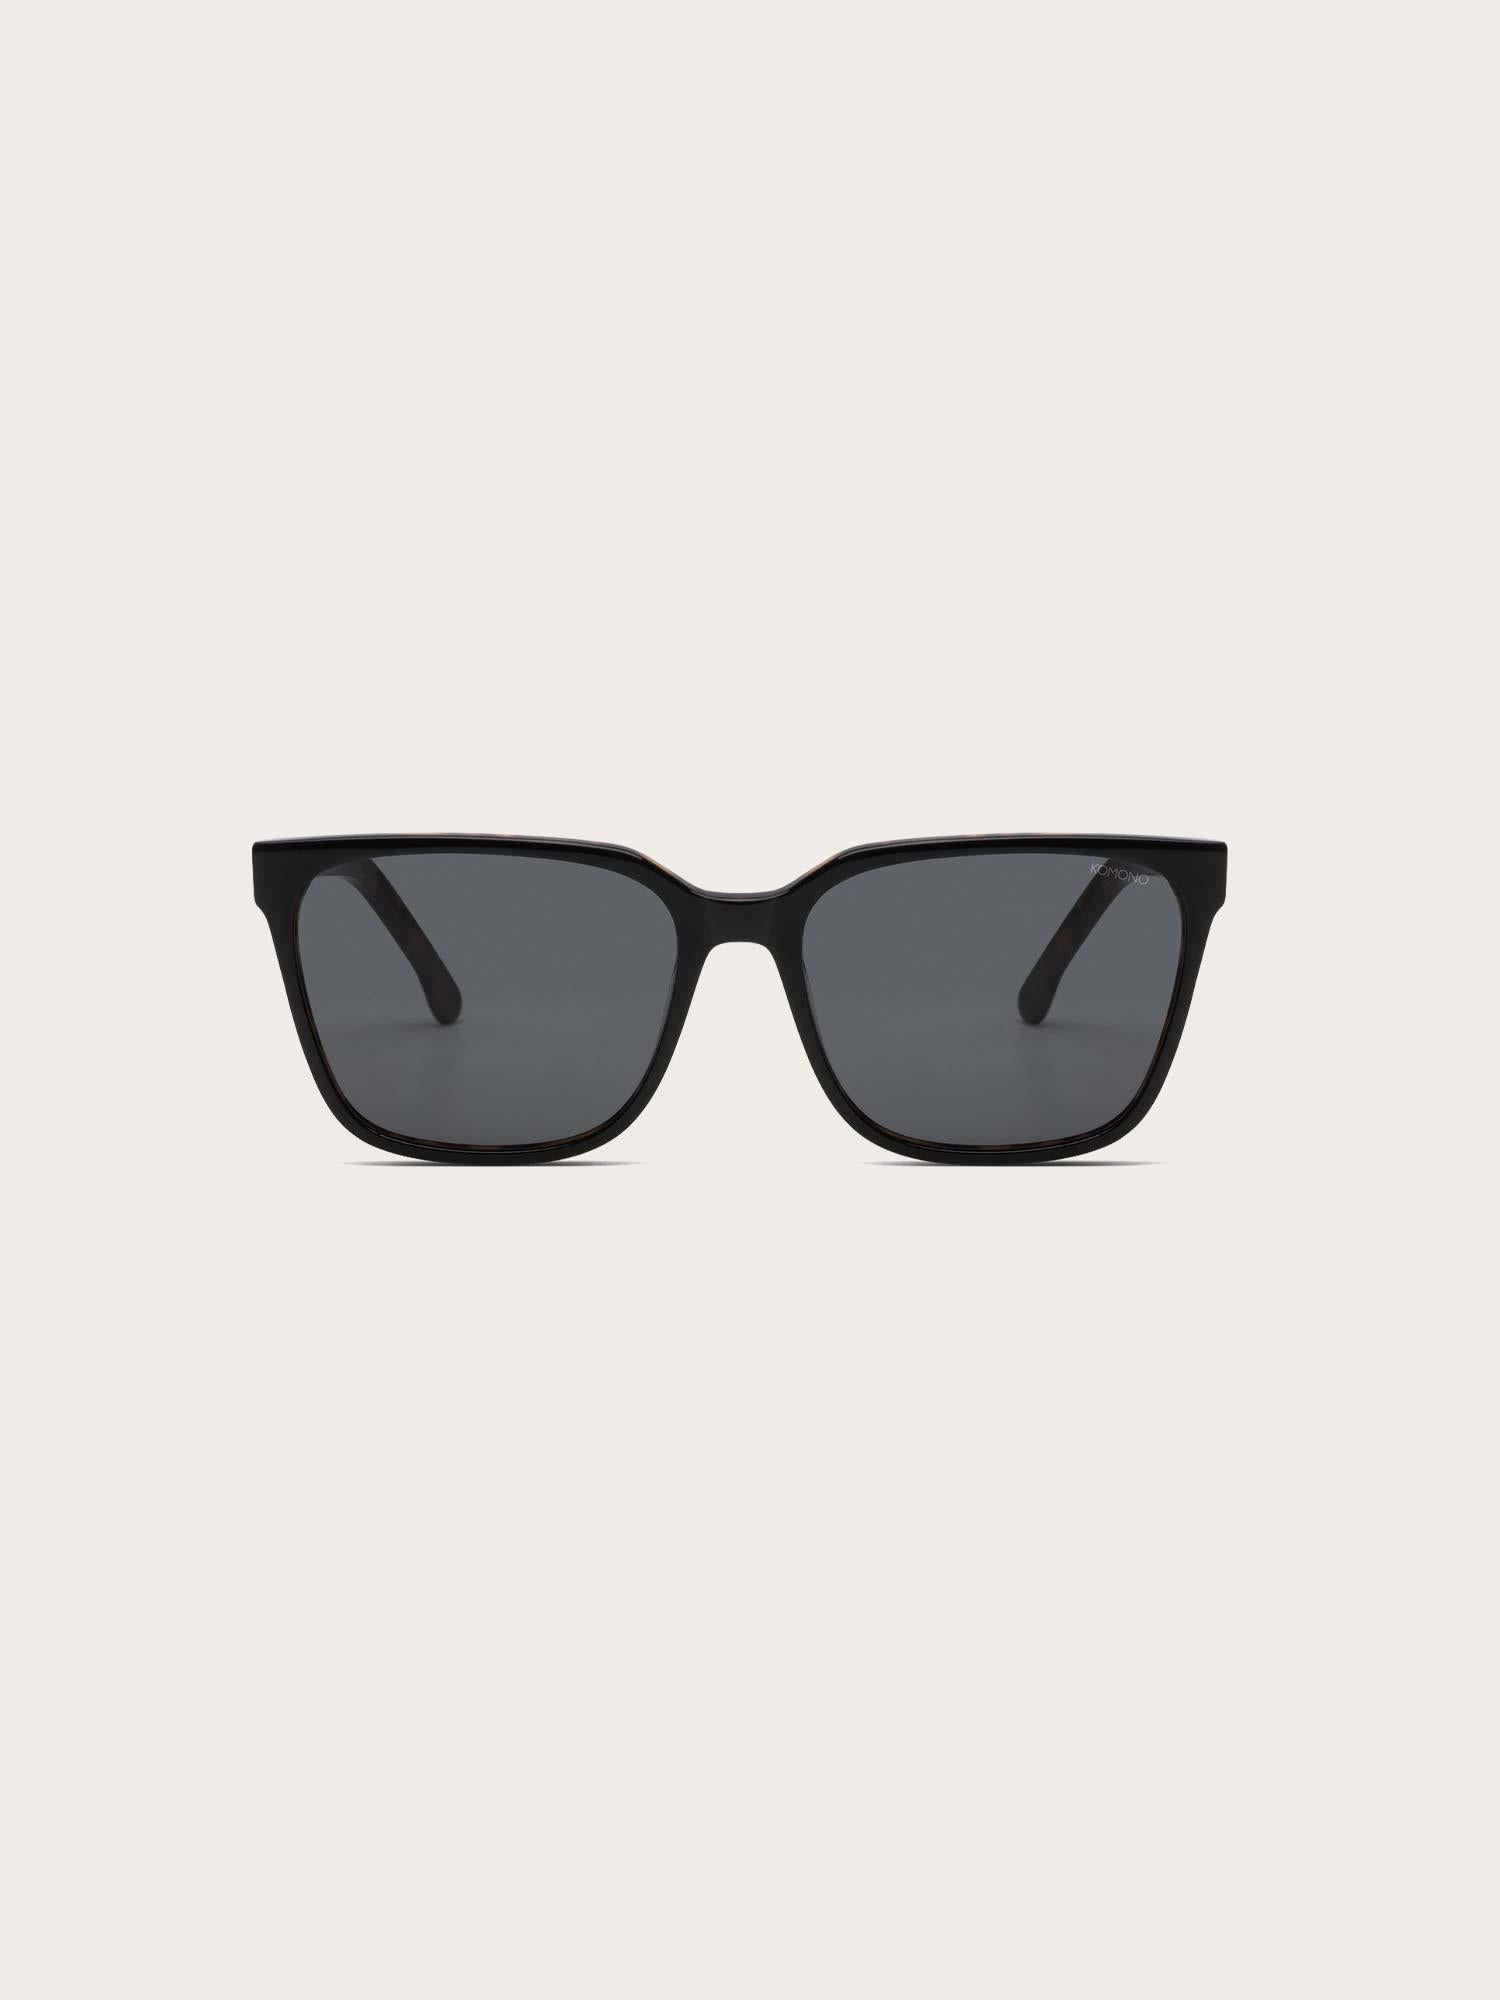 Cole Sunglasses - Black Tortoise